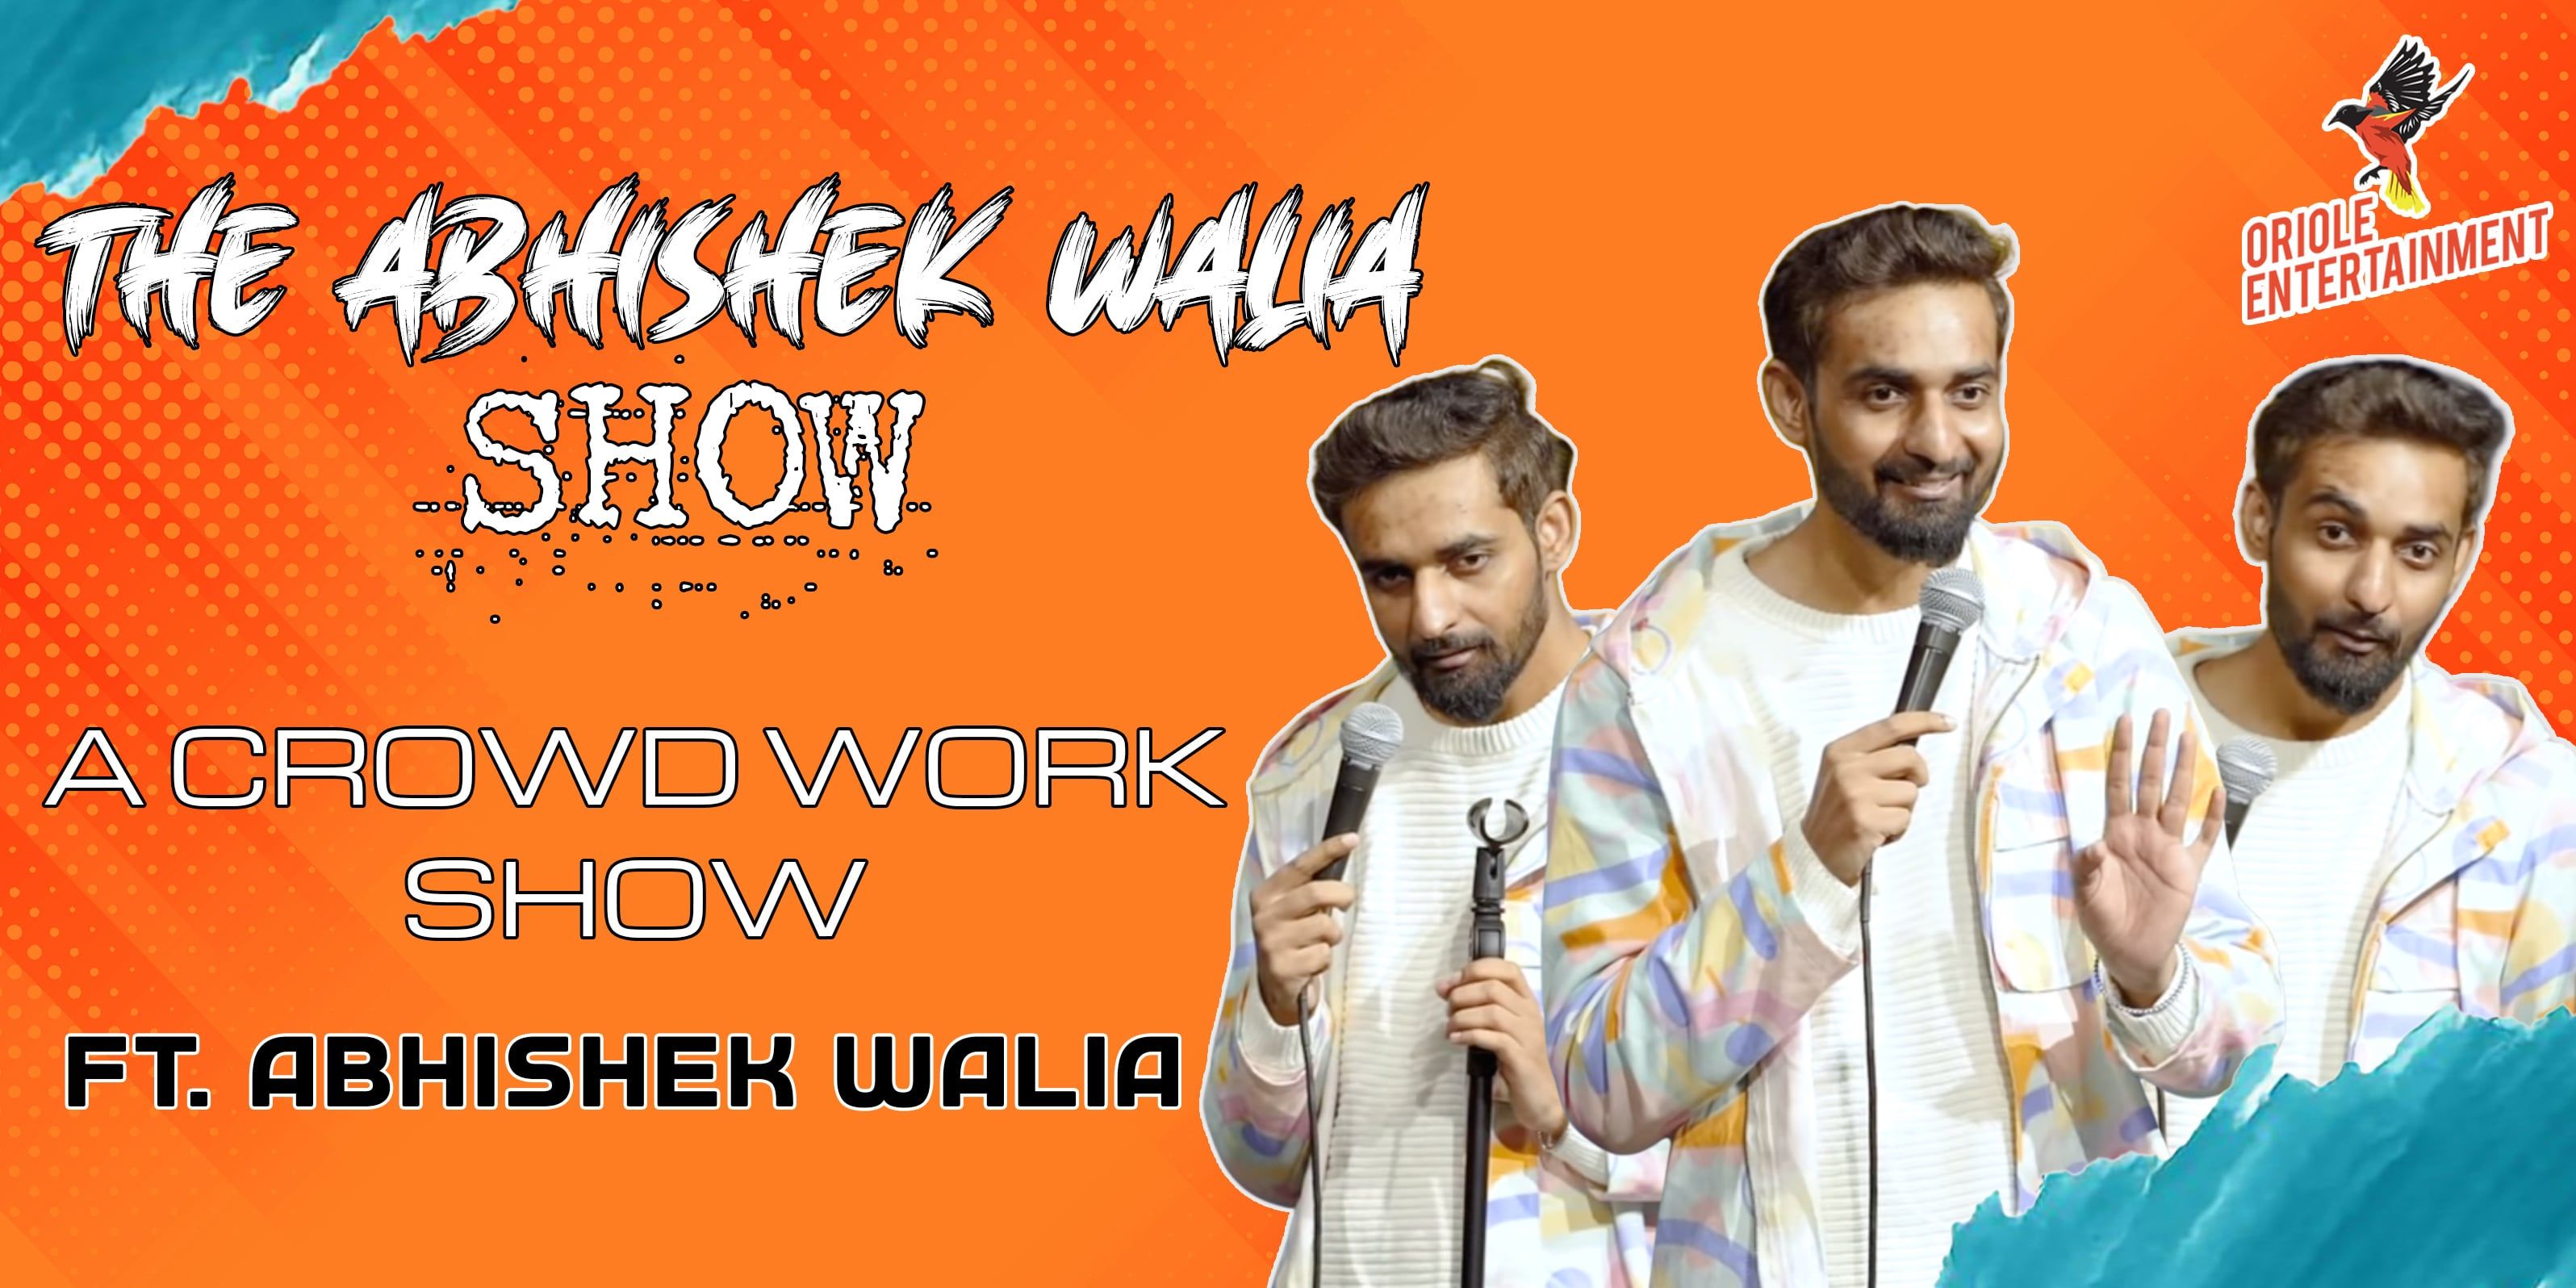 The Abhishek Walia Show in Hyderabad